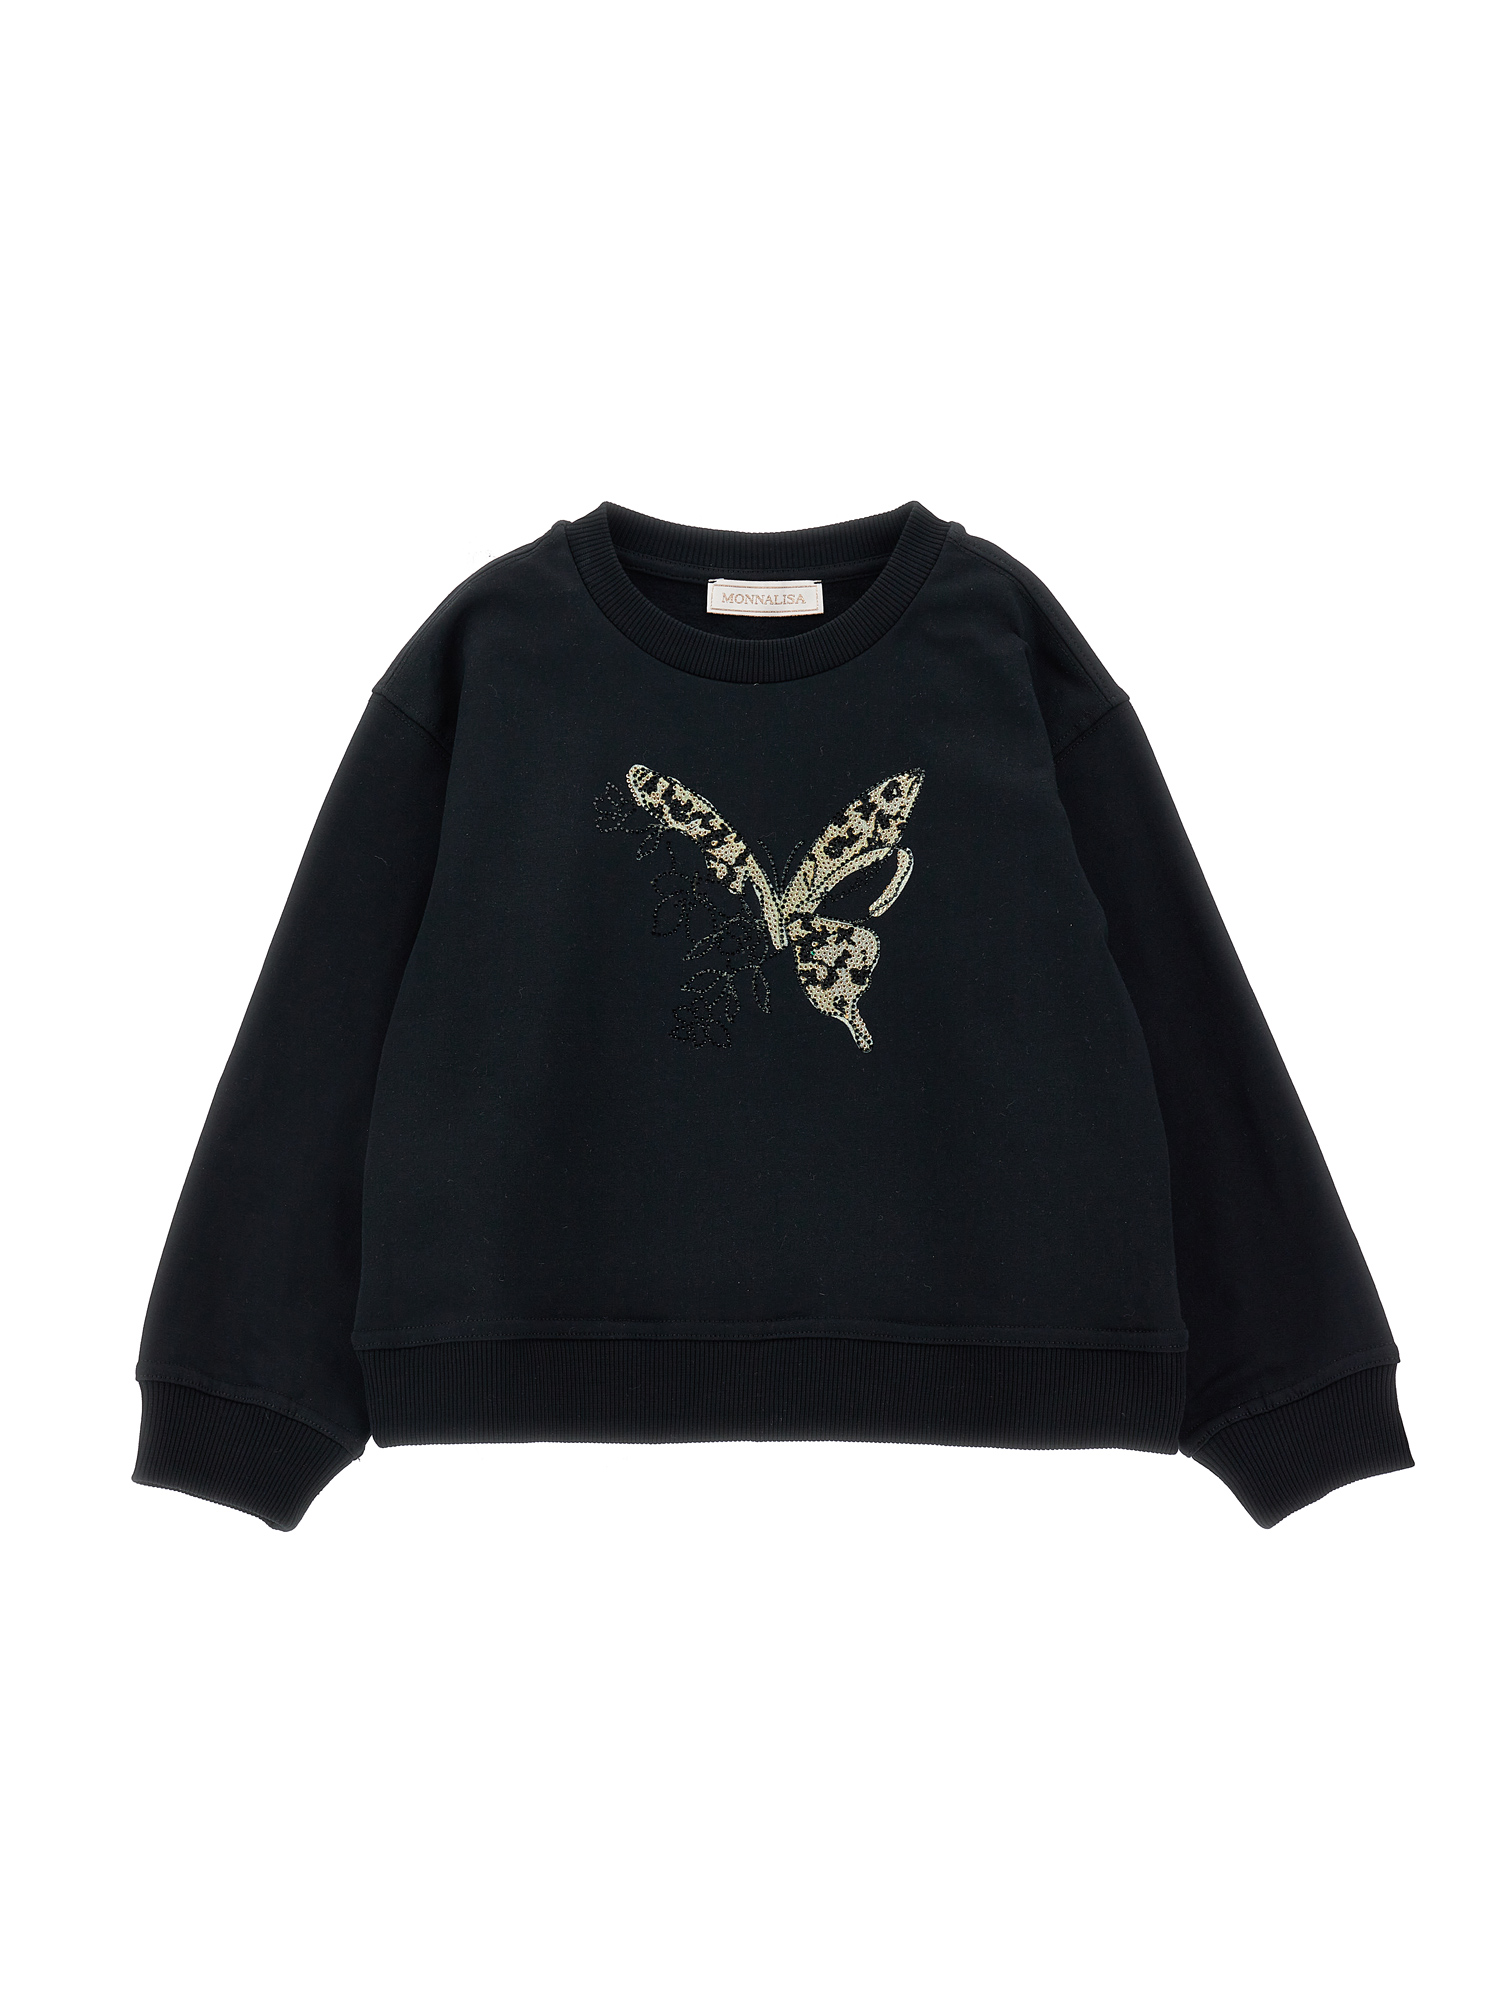 Monnalisa Butterfly Print Sweatshirt In Black